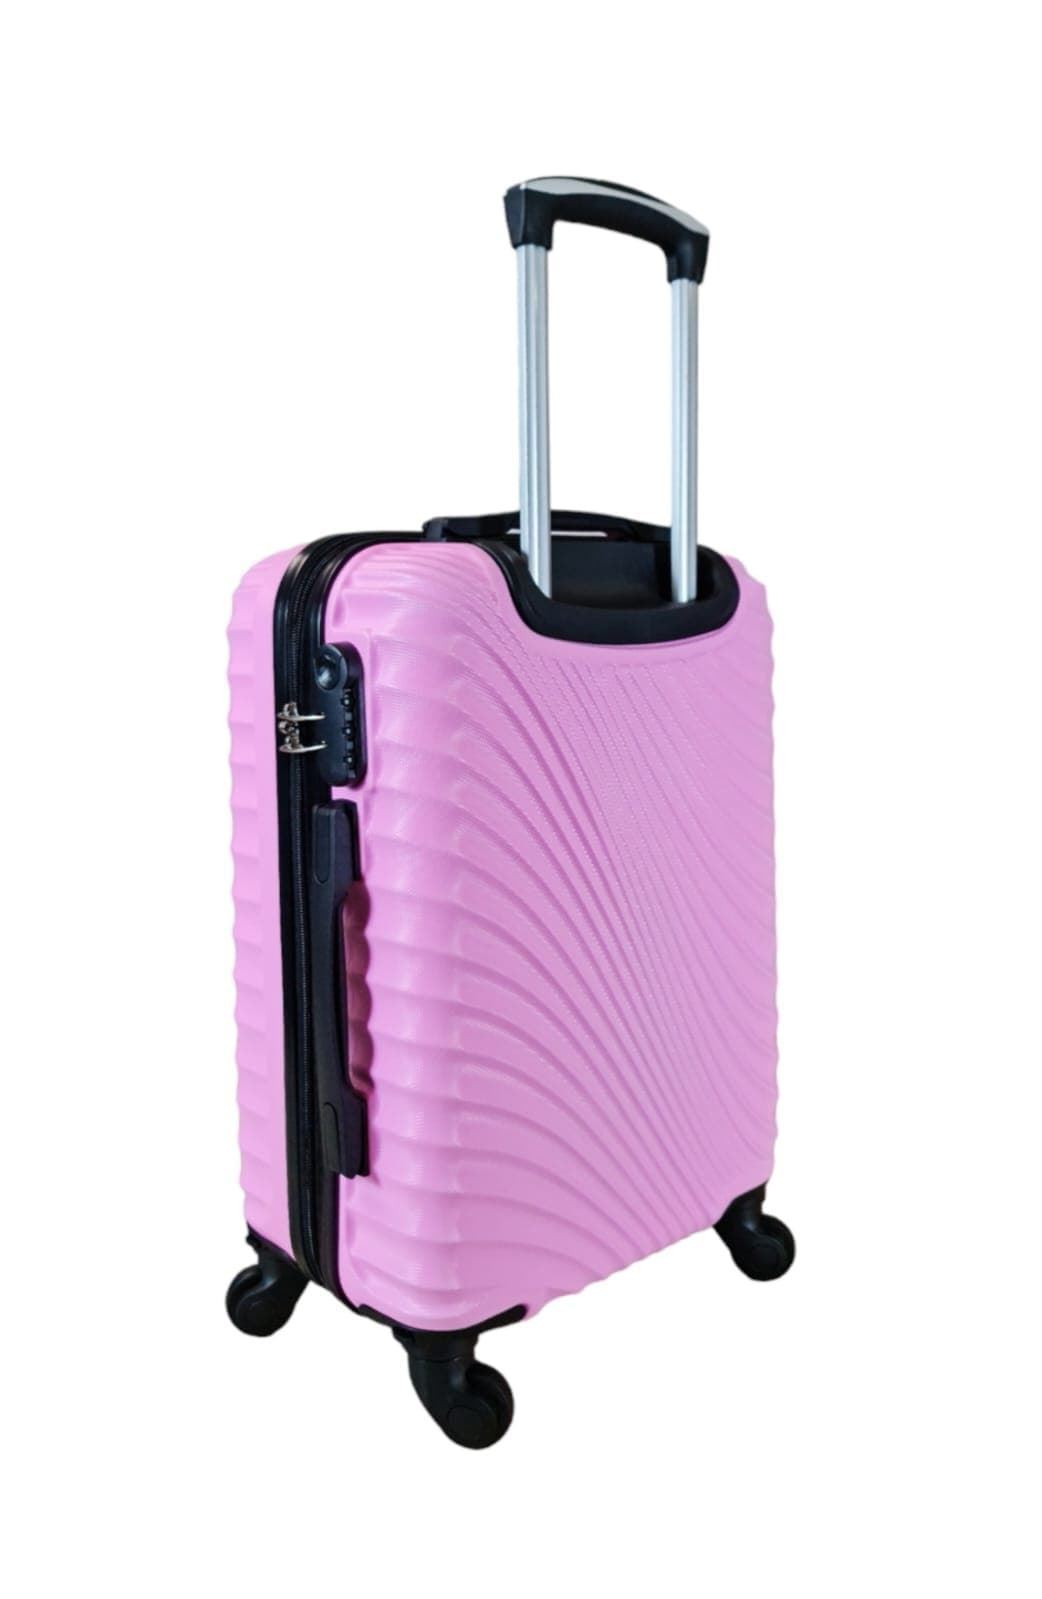 Maleta de Viaje Tamaño Cabina VIP Peso 10 kilos Material ABS Barata Medidas 55x40x20 color Rosa Barbie - Imagen 3